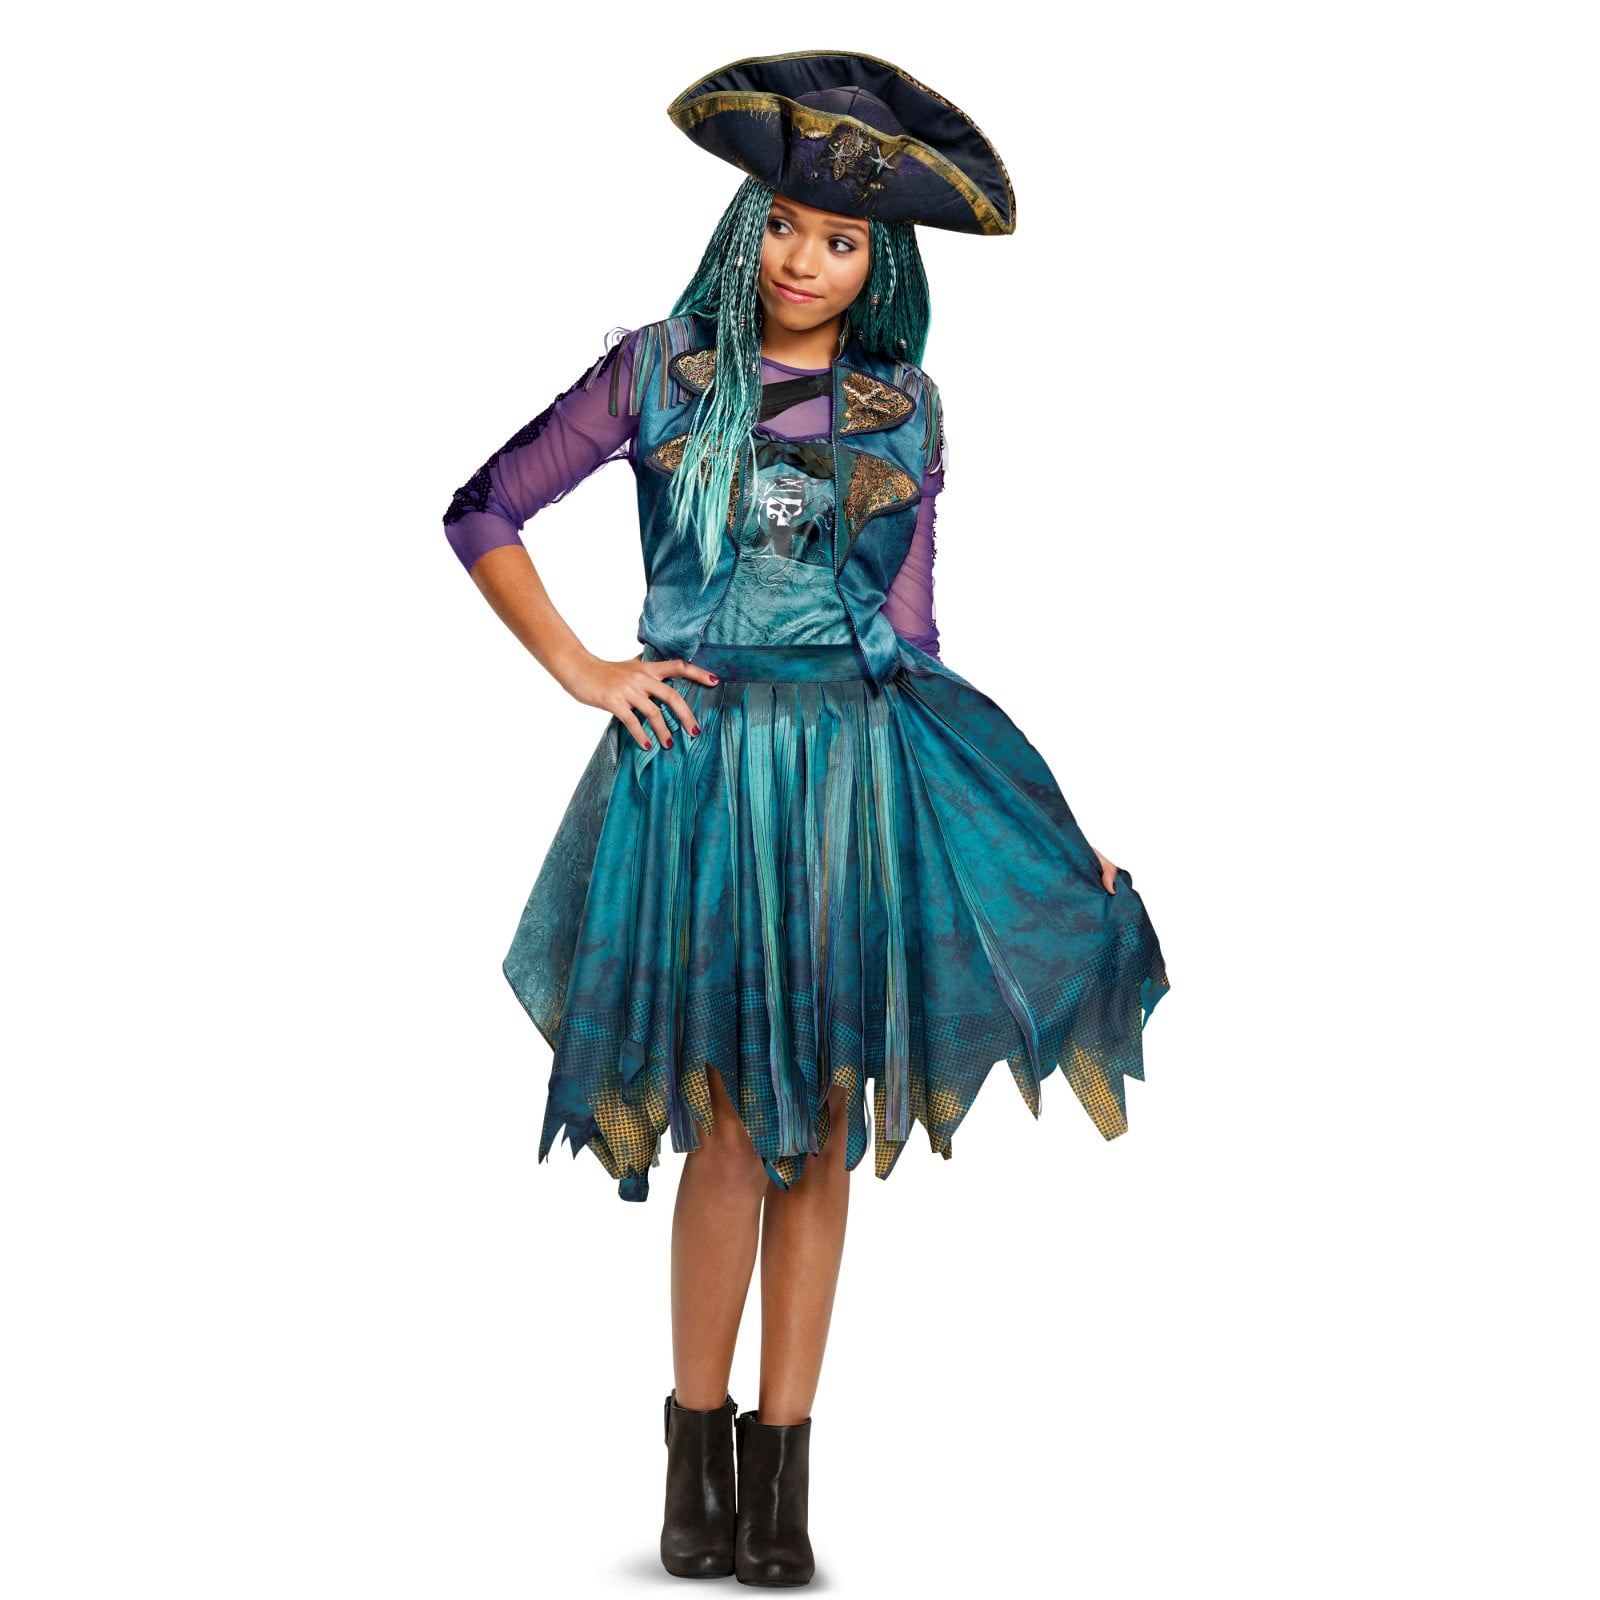 Details about   Disney Store DESCENDANTS 2 UMA Pirate Halloween Kids Costumes Gloves SIZE 9/10 